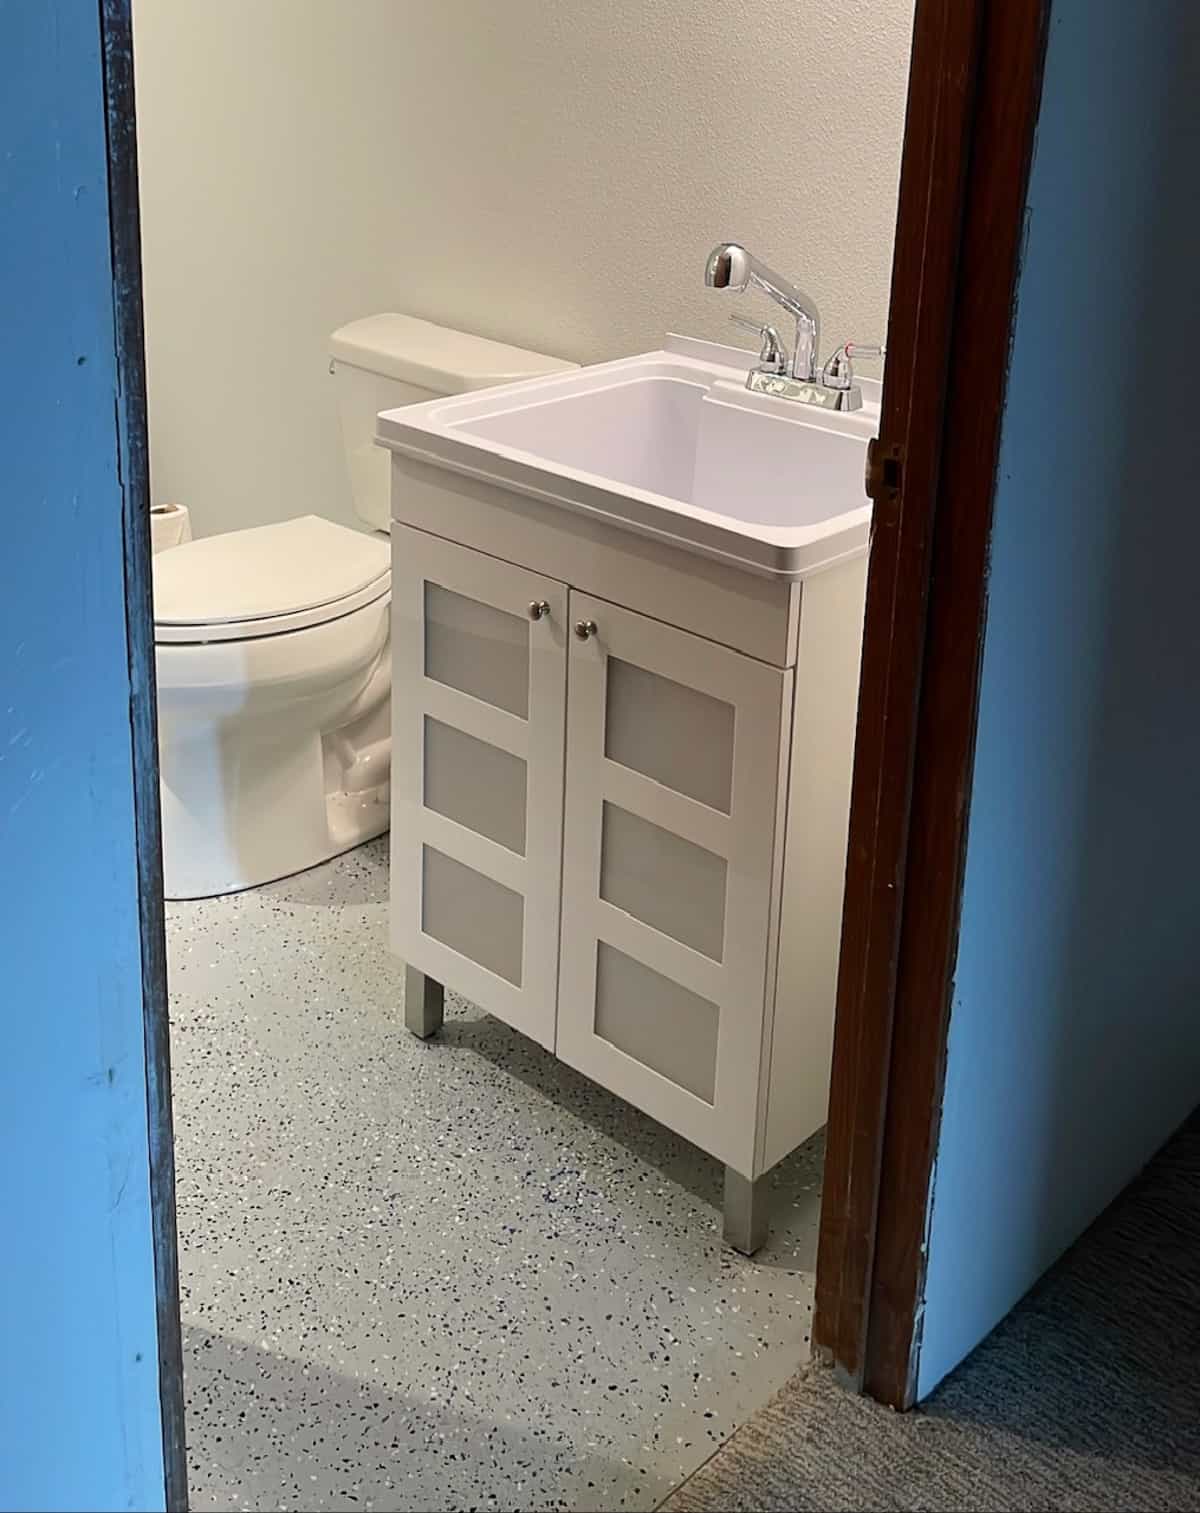 a white utility sink in a bathroom.